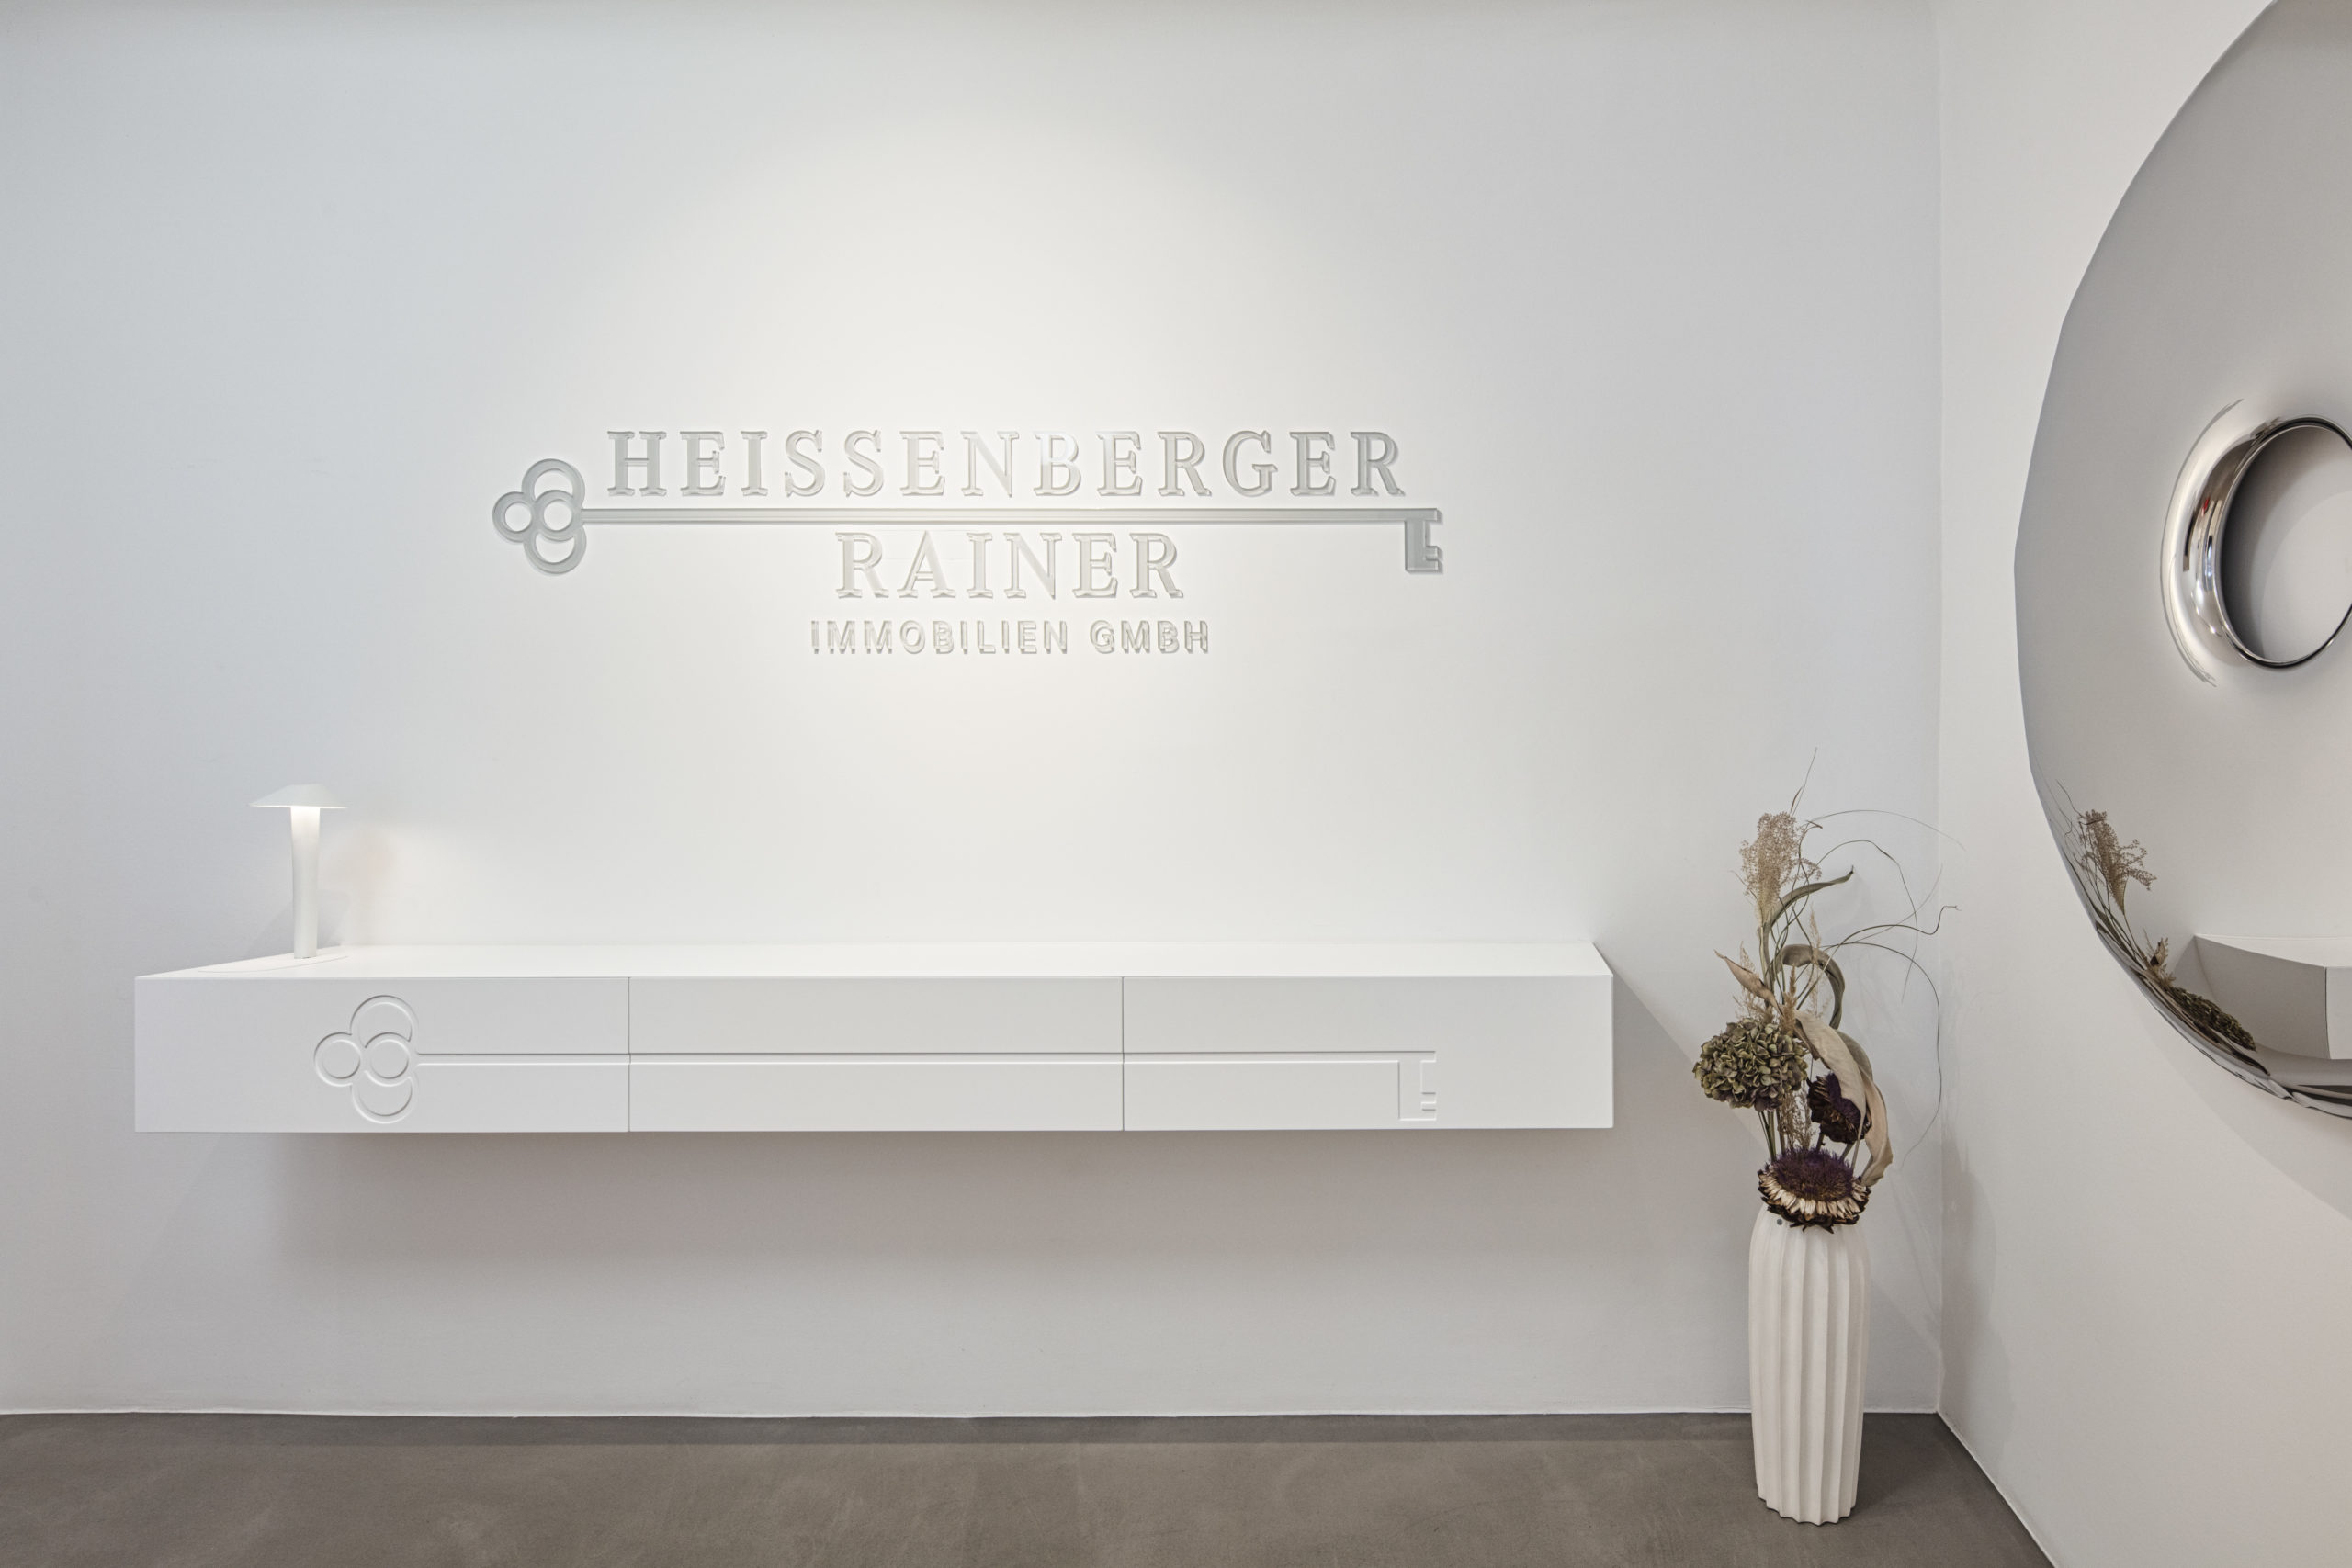 Wertheimer Showroom Vienna. HR-Immo Office. Photography by Faruk Pinjo, 2020.